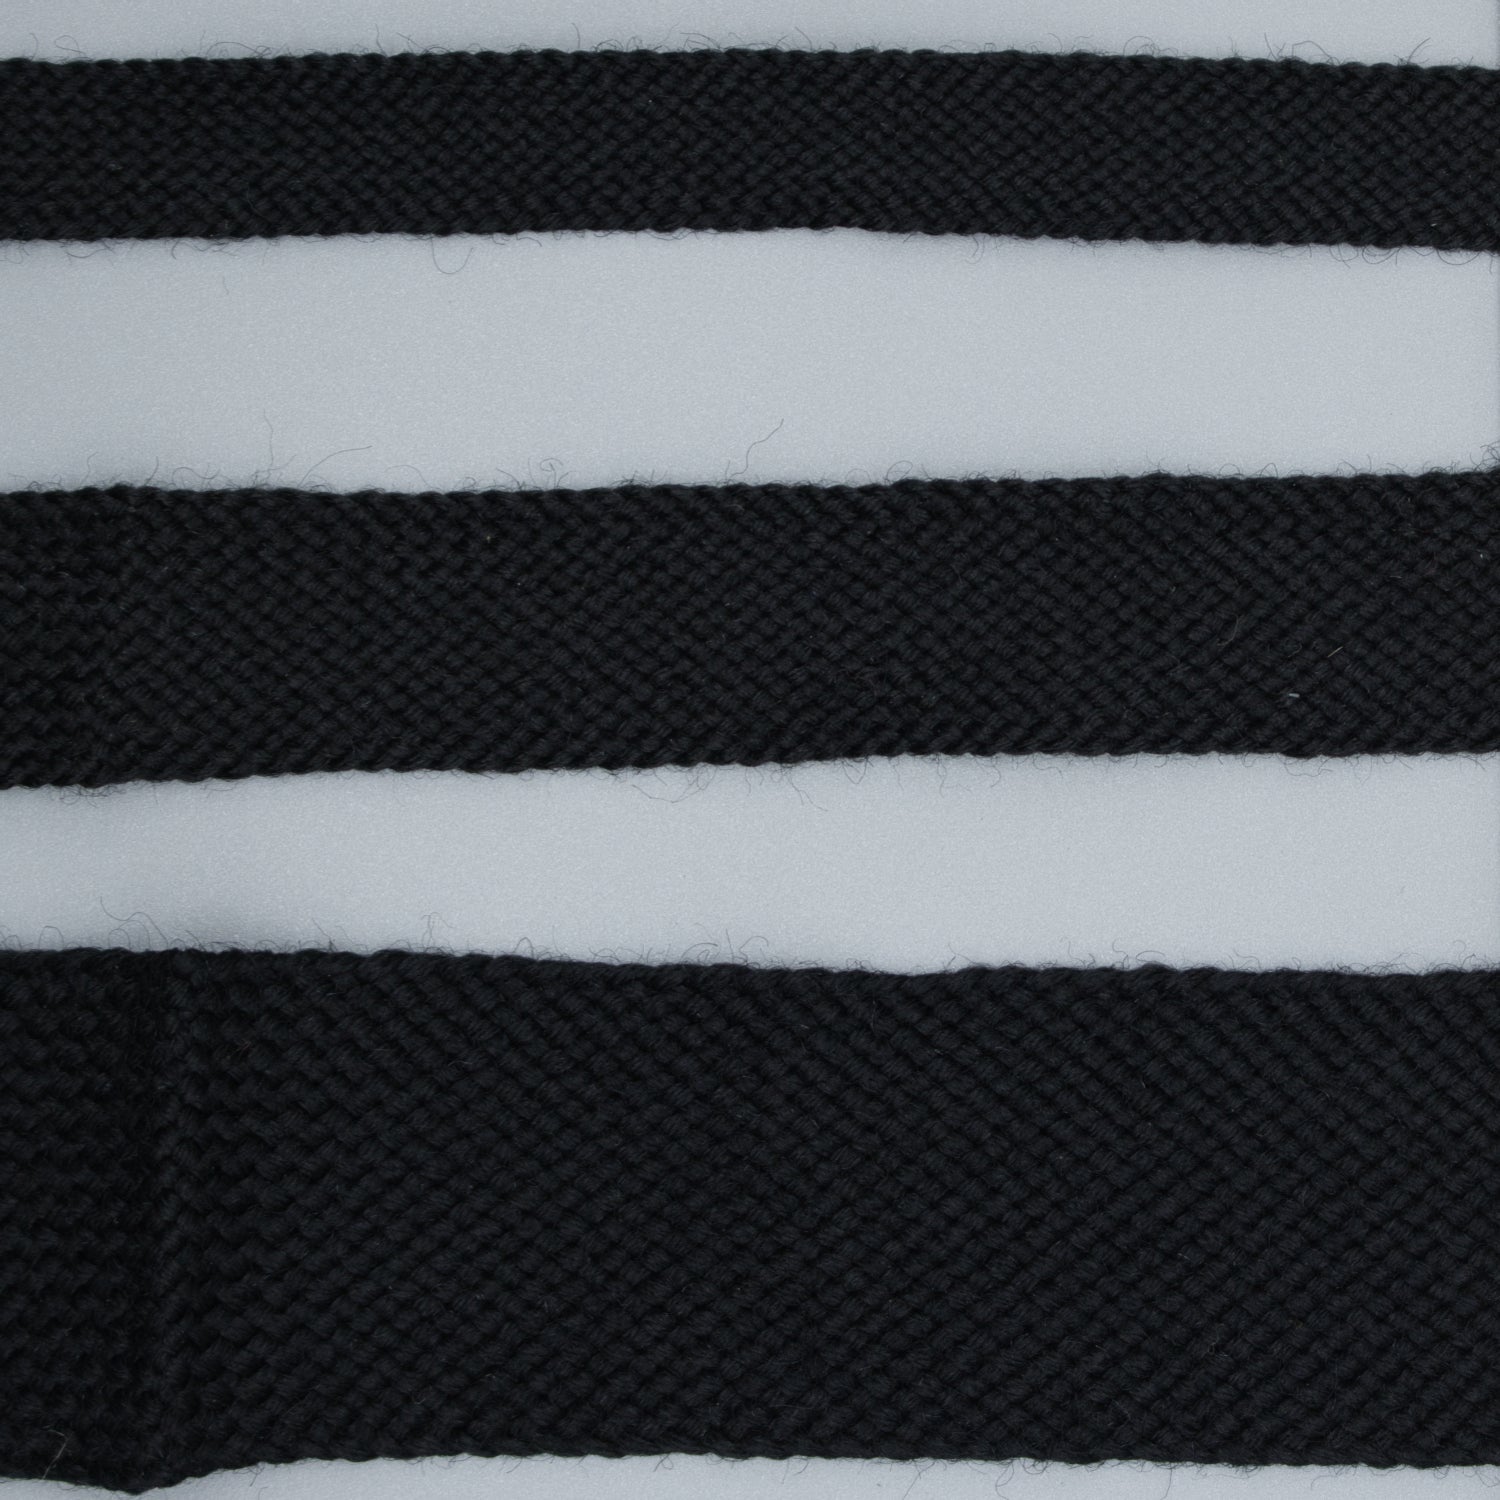 Wool Tape in black 1/2 inch, 5/8 inch, 1-1/4 inch